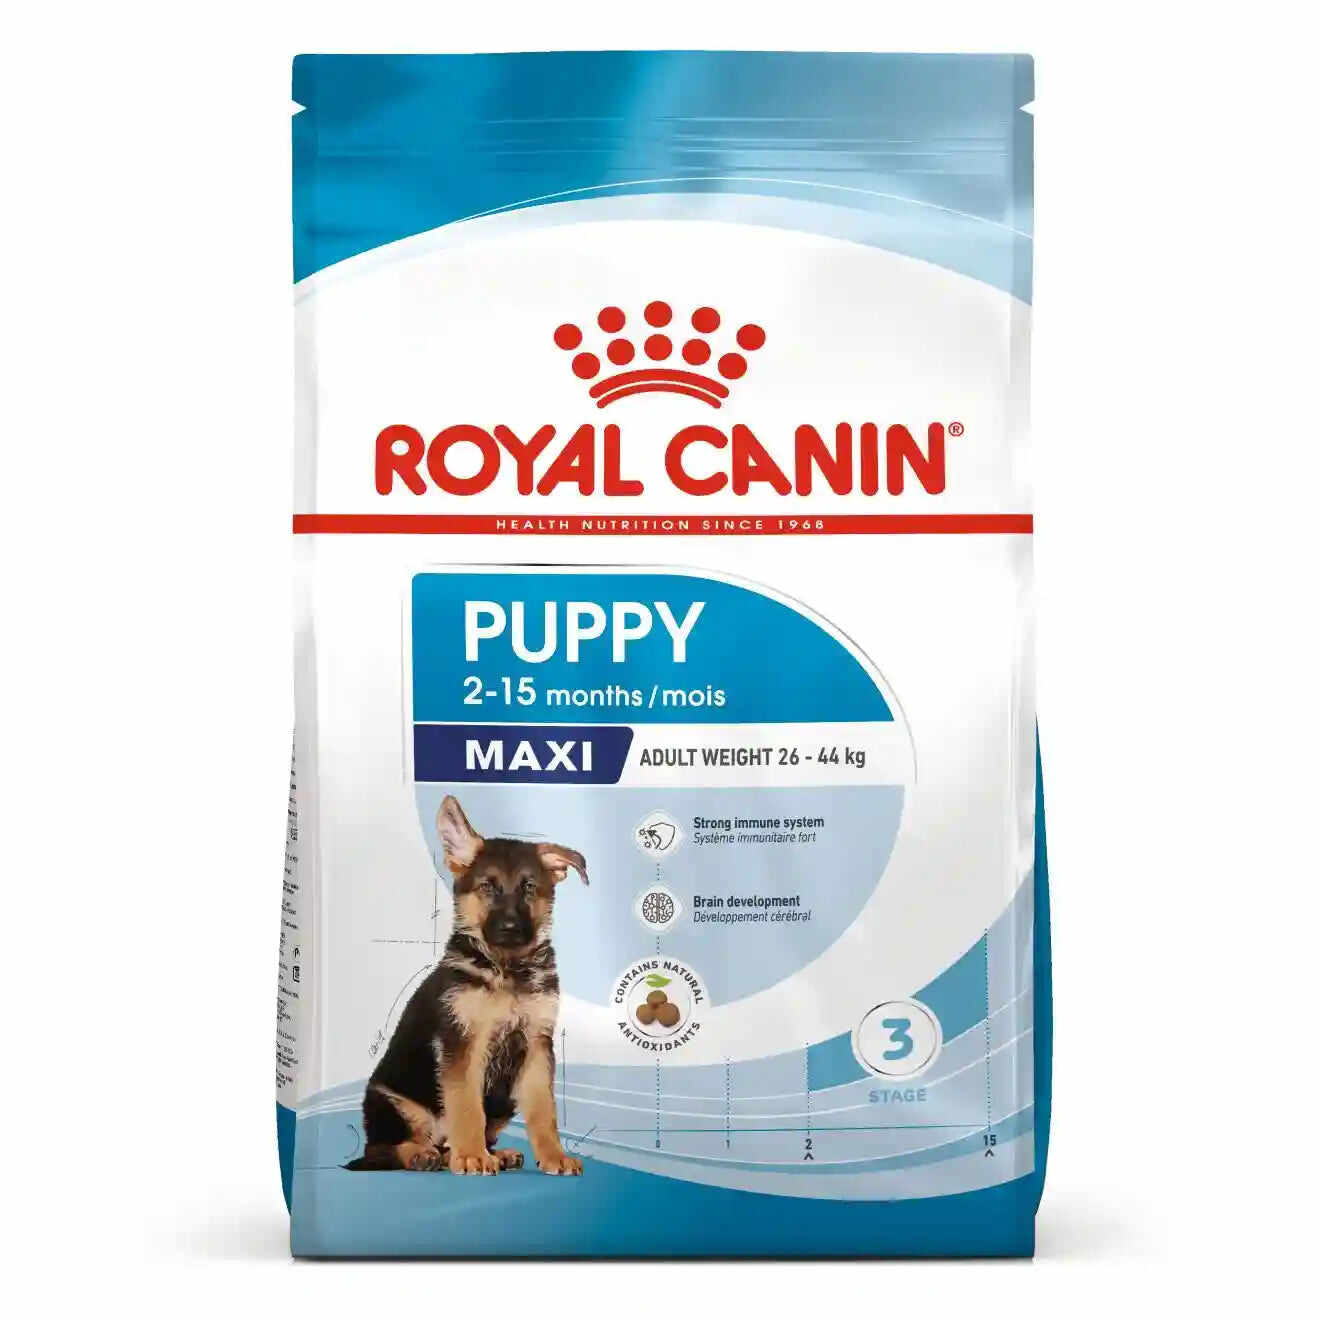 Royal Canin - Puppy MAXI Dry Food